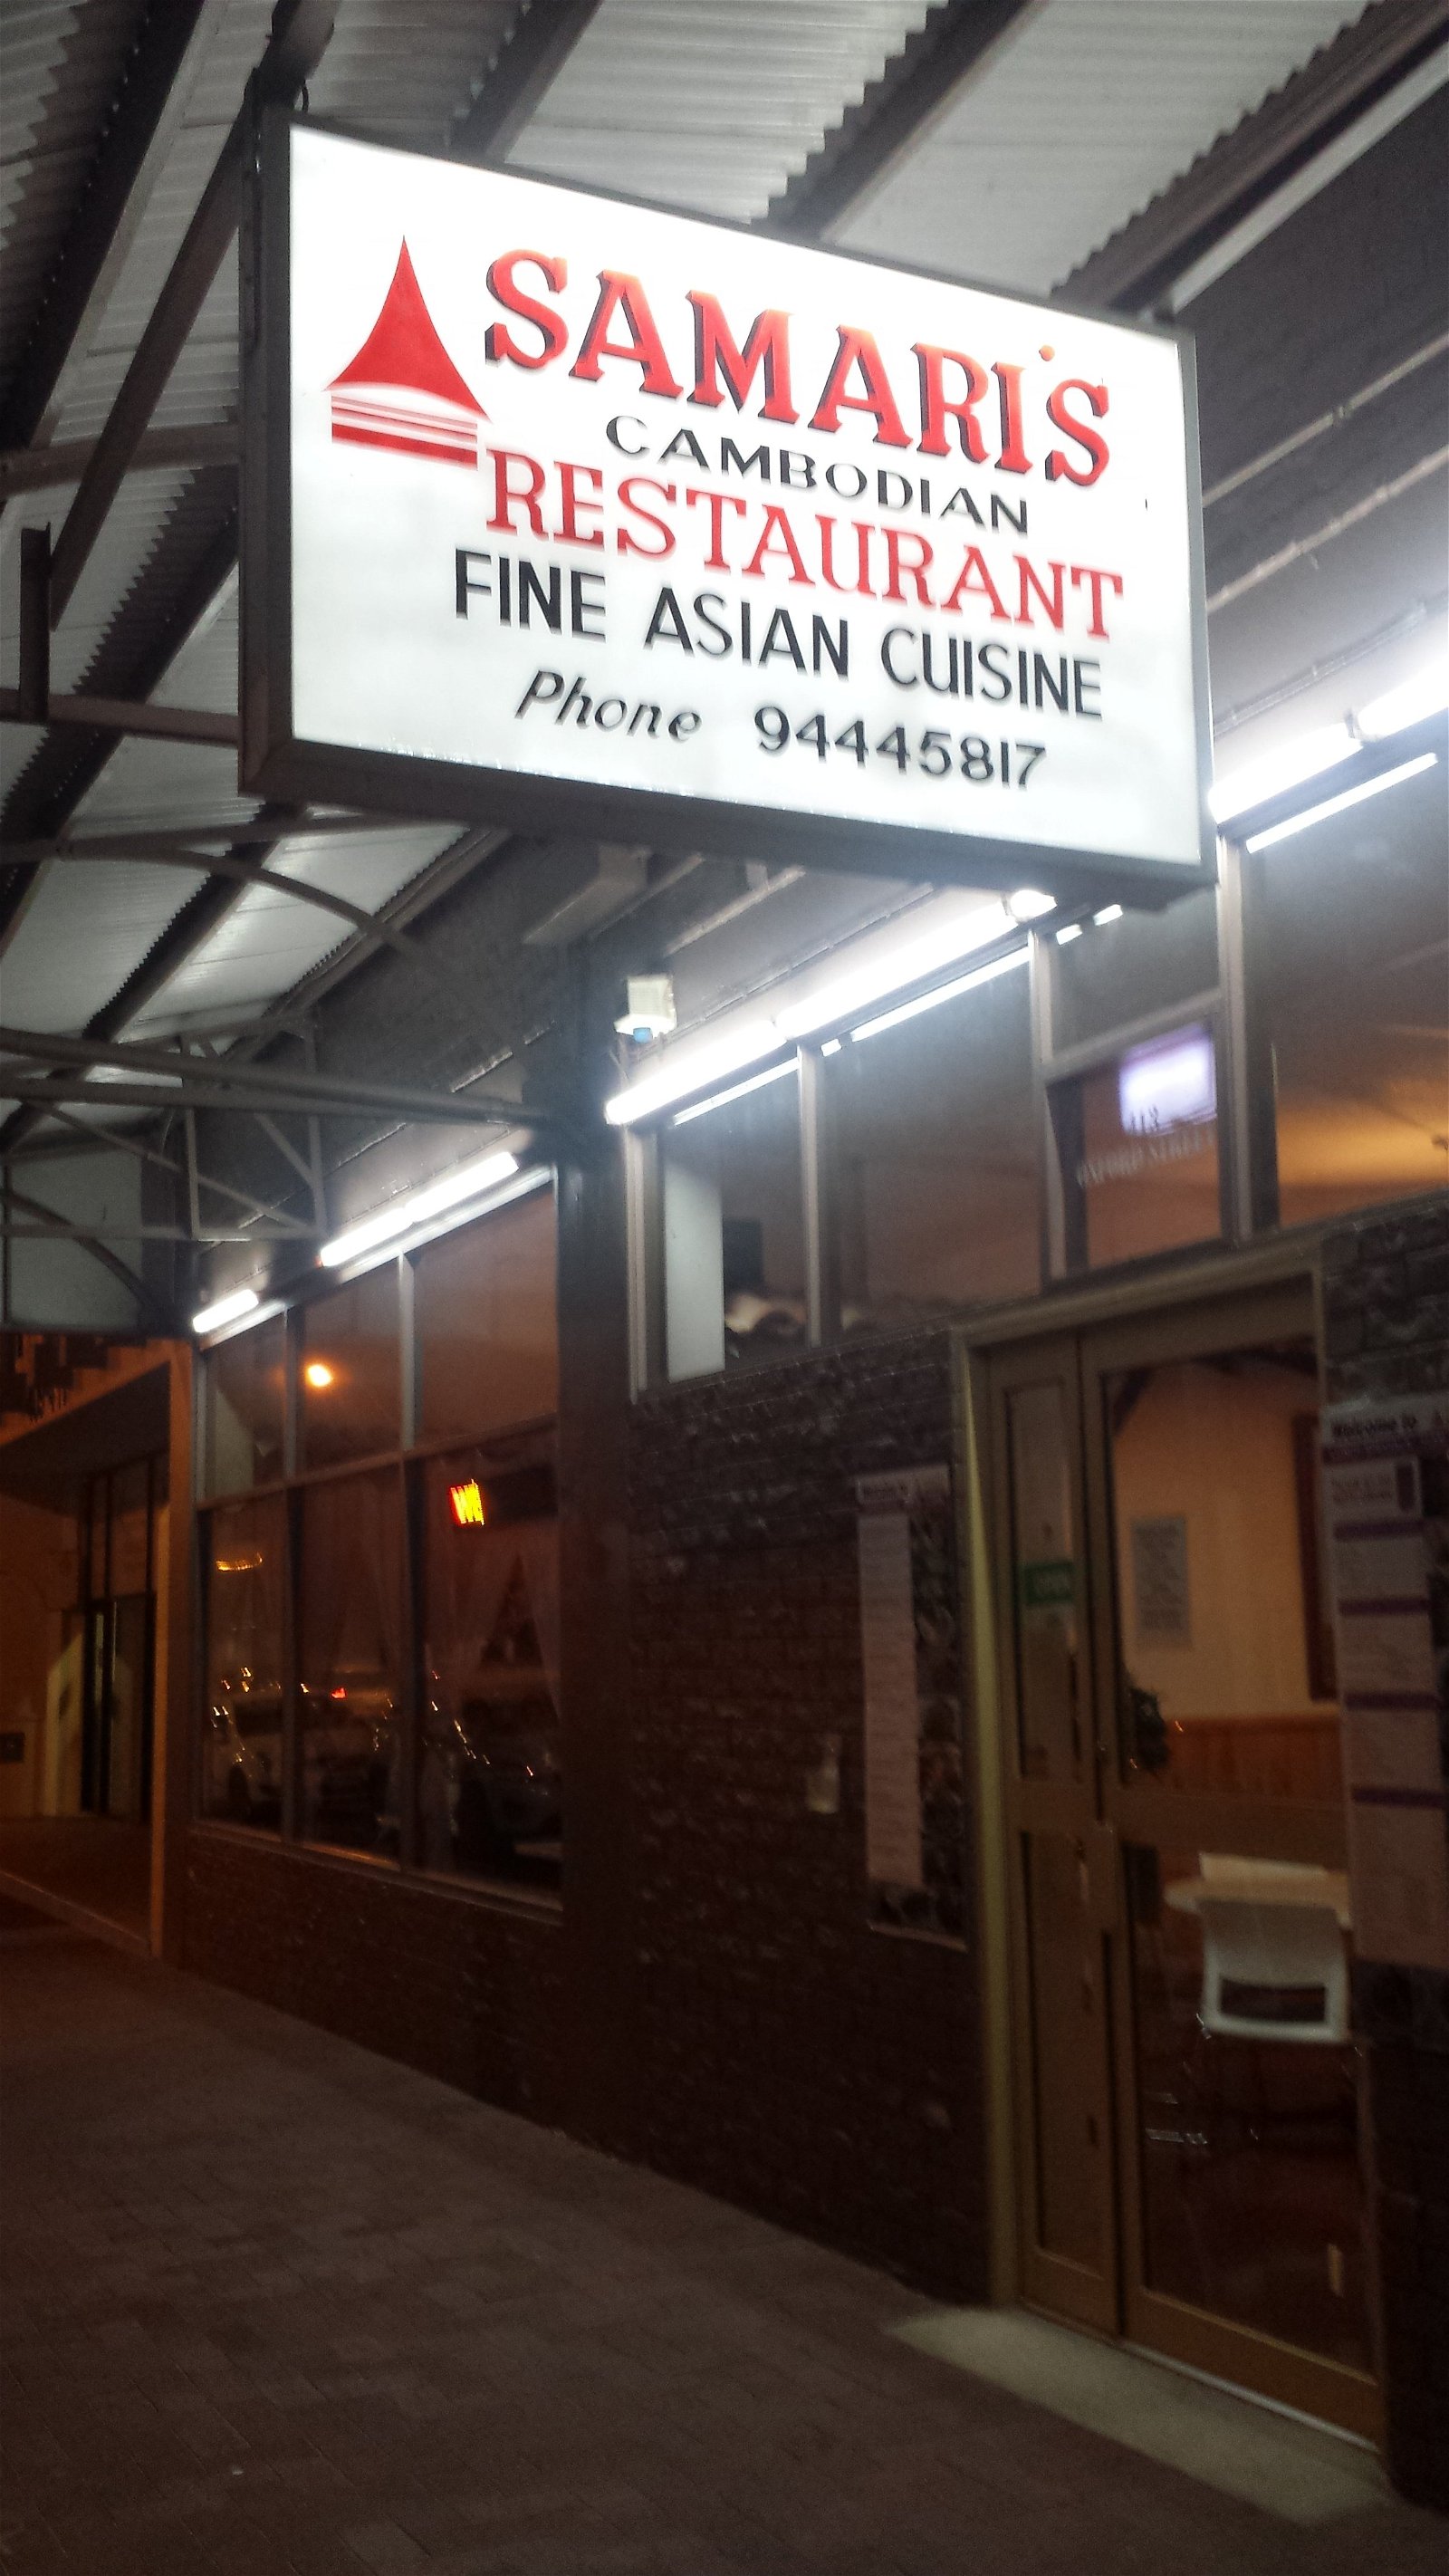 Samari's Restaurant Fine Asian Cuisine - thumb 2